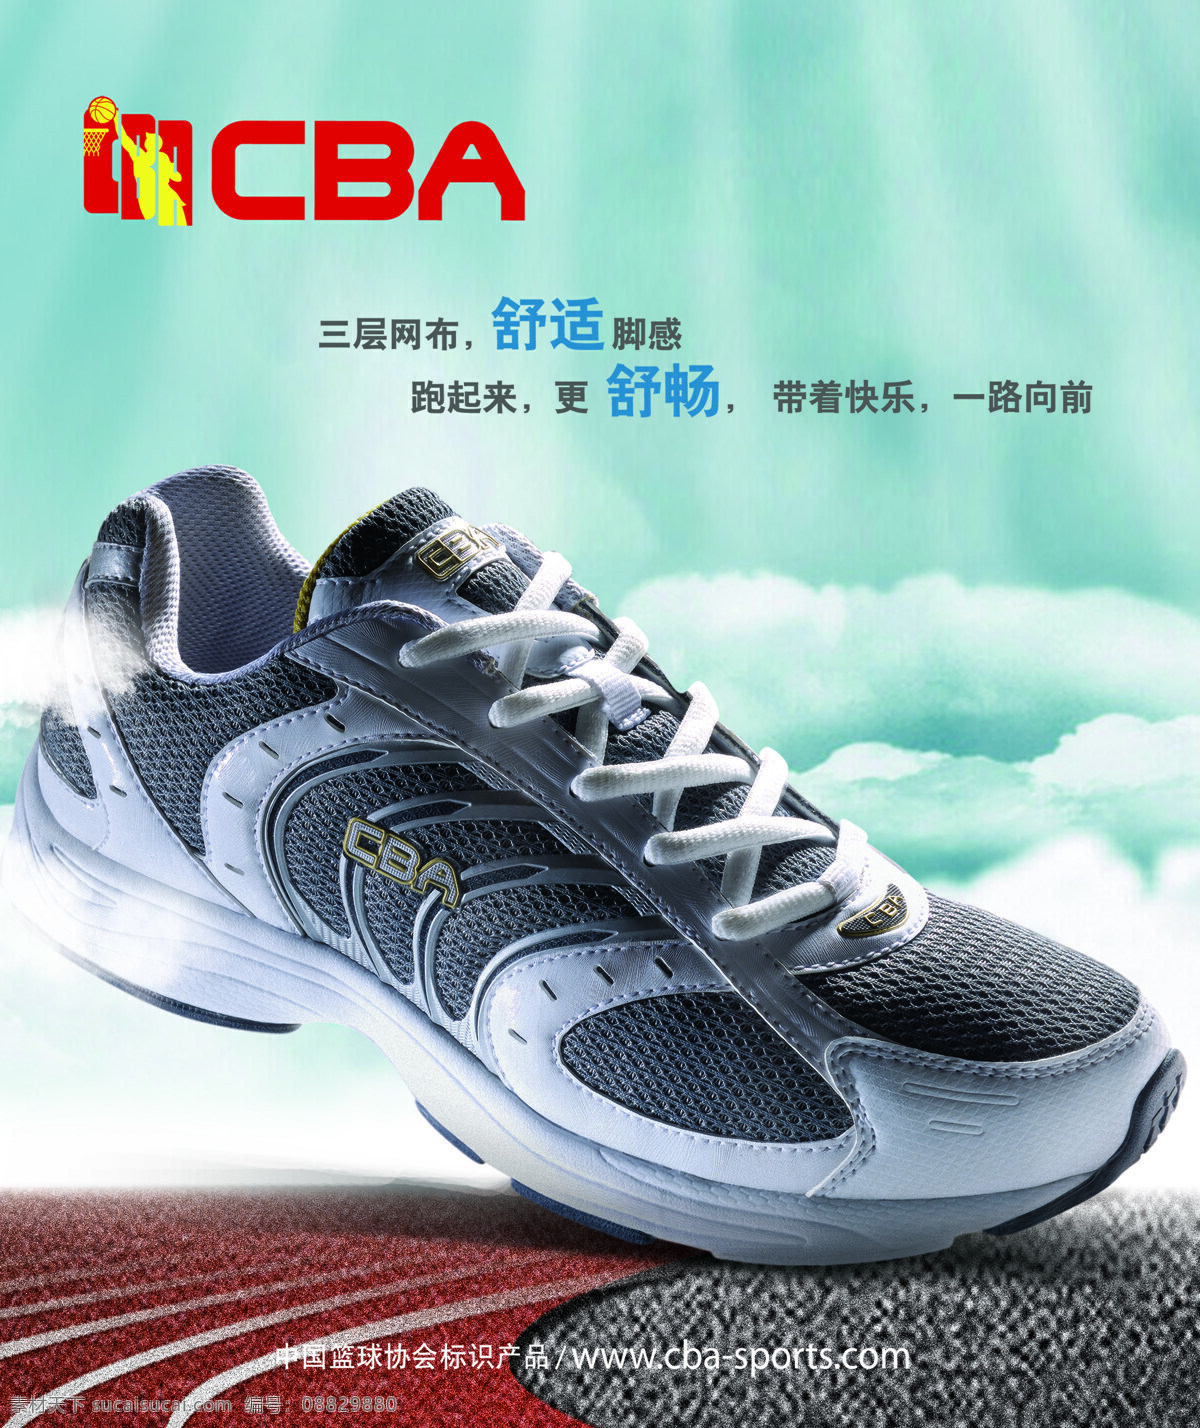 cba 鞋类 海报 设计图库 生活百科 体育用品 其他海报设计